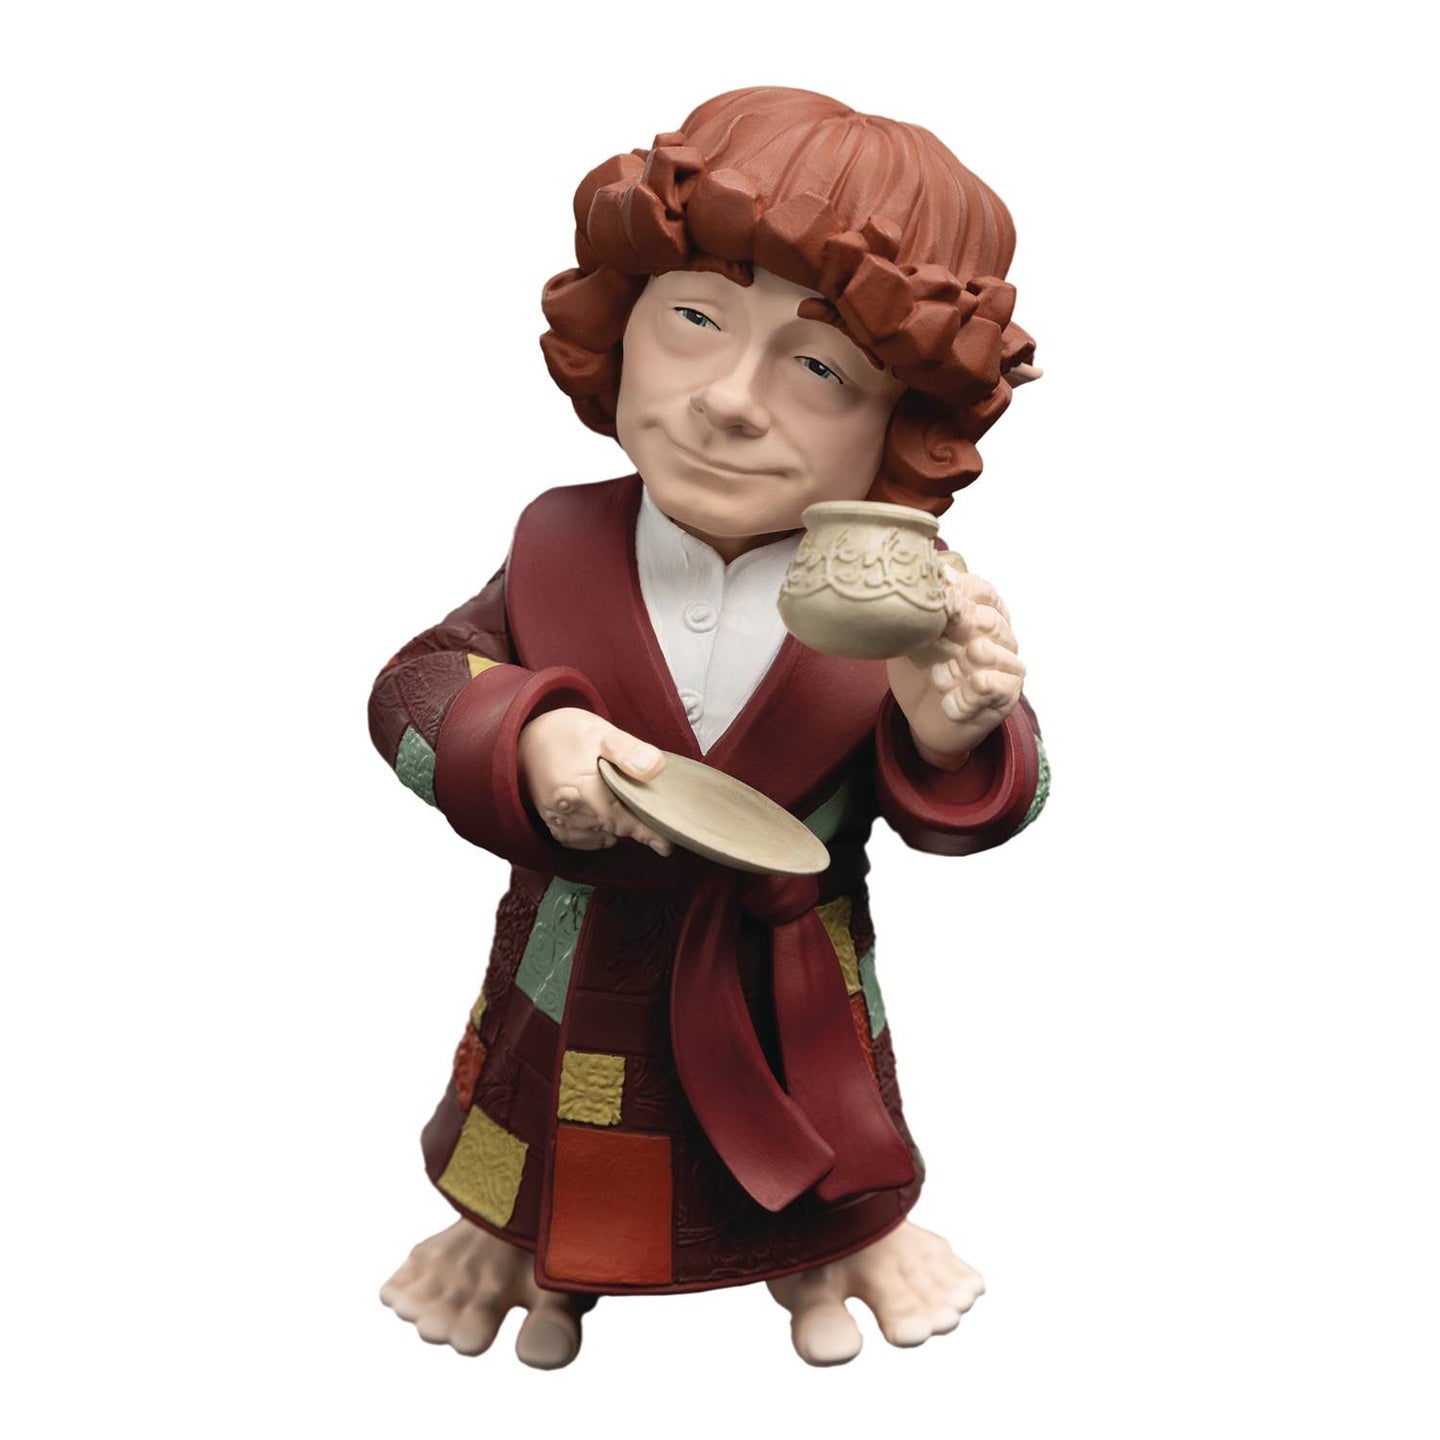 Mini Epics Hobbit Trilogy Bilbo Baggins Limited Edition Figure